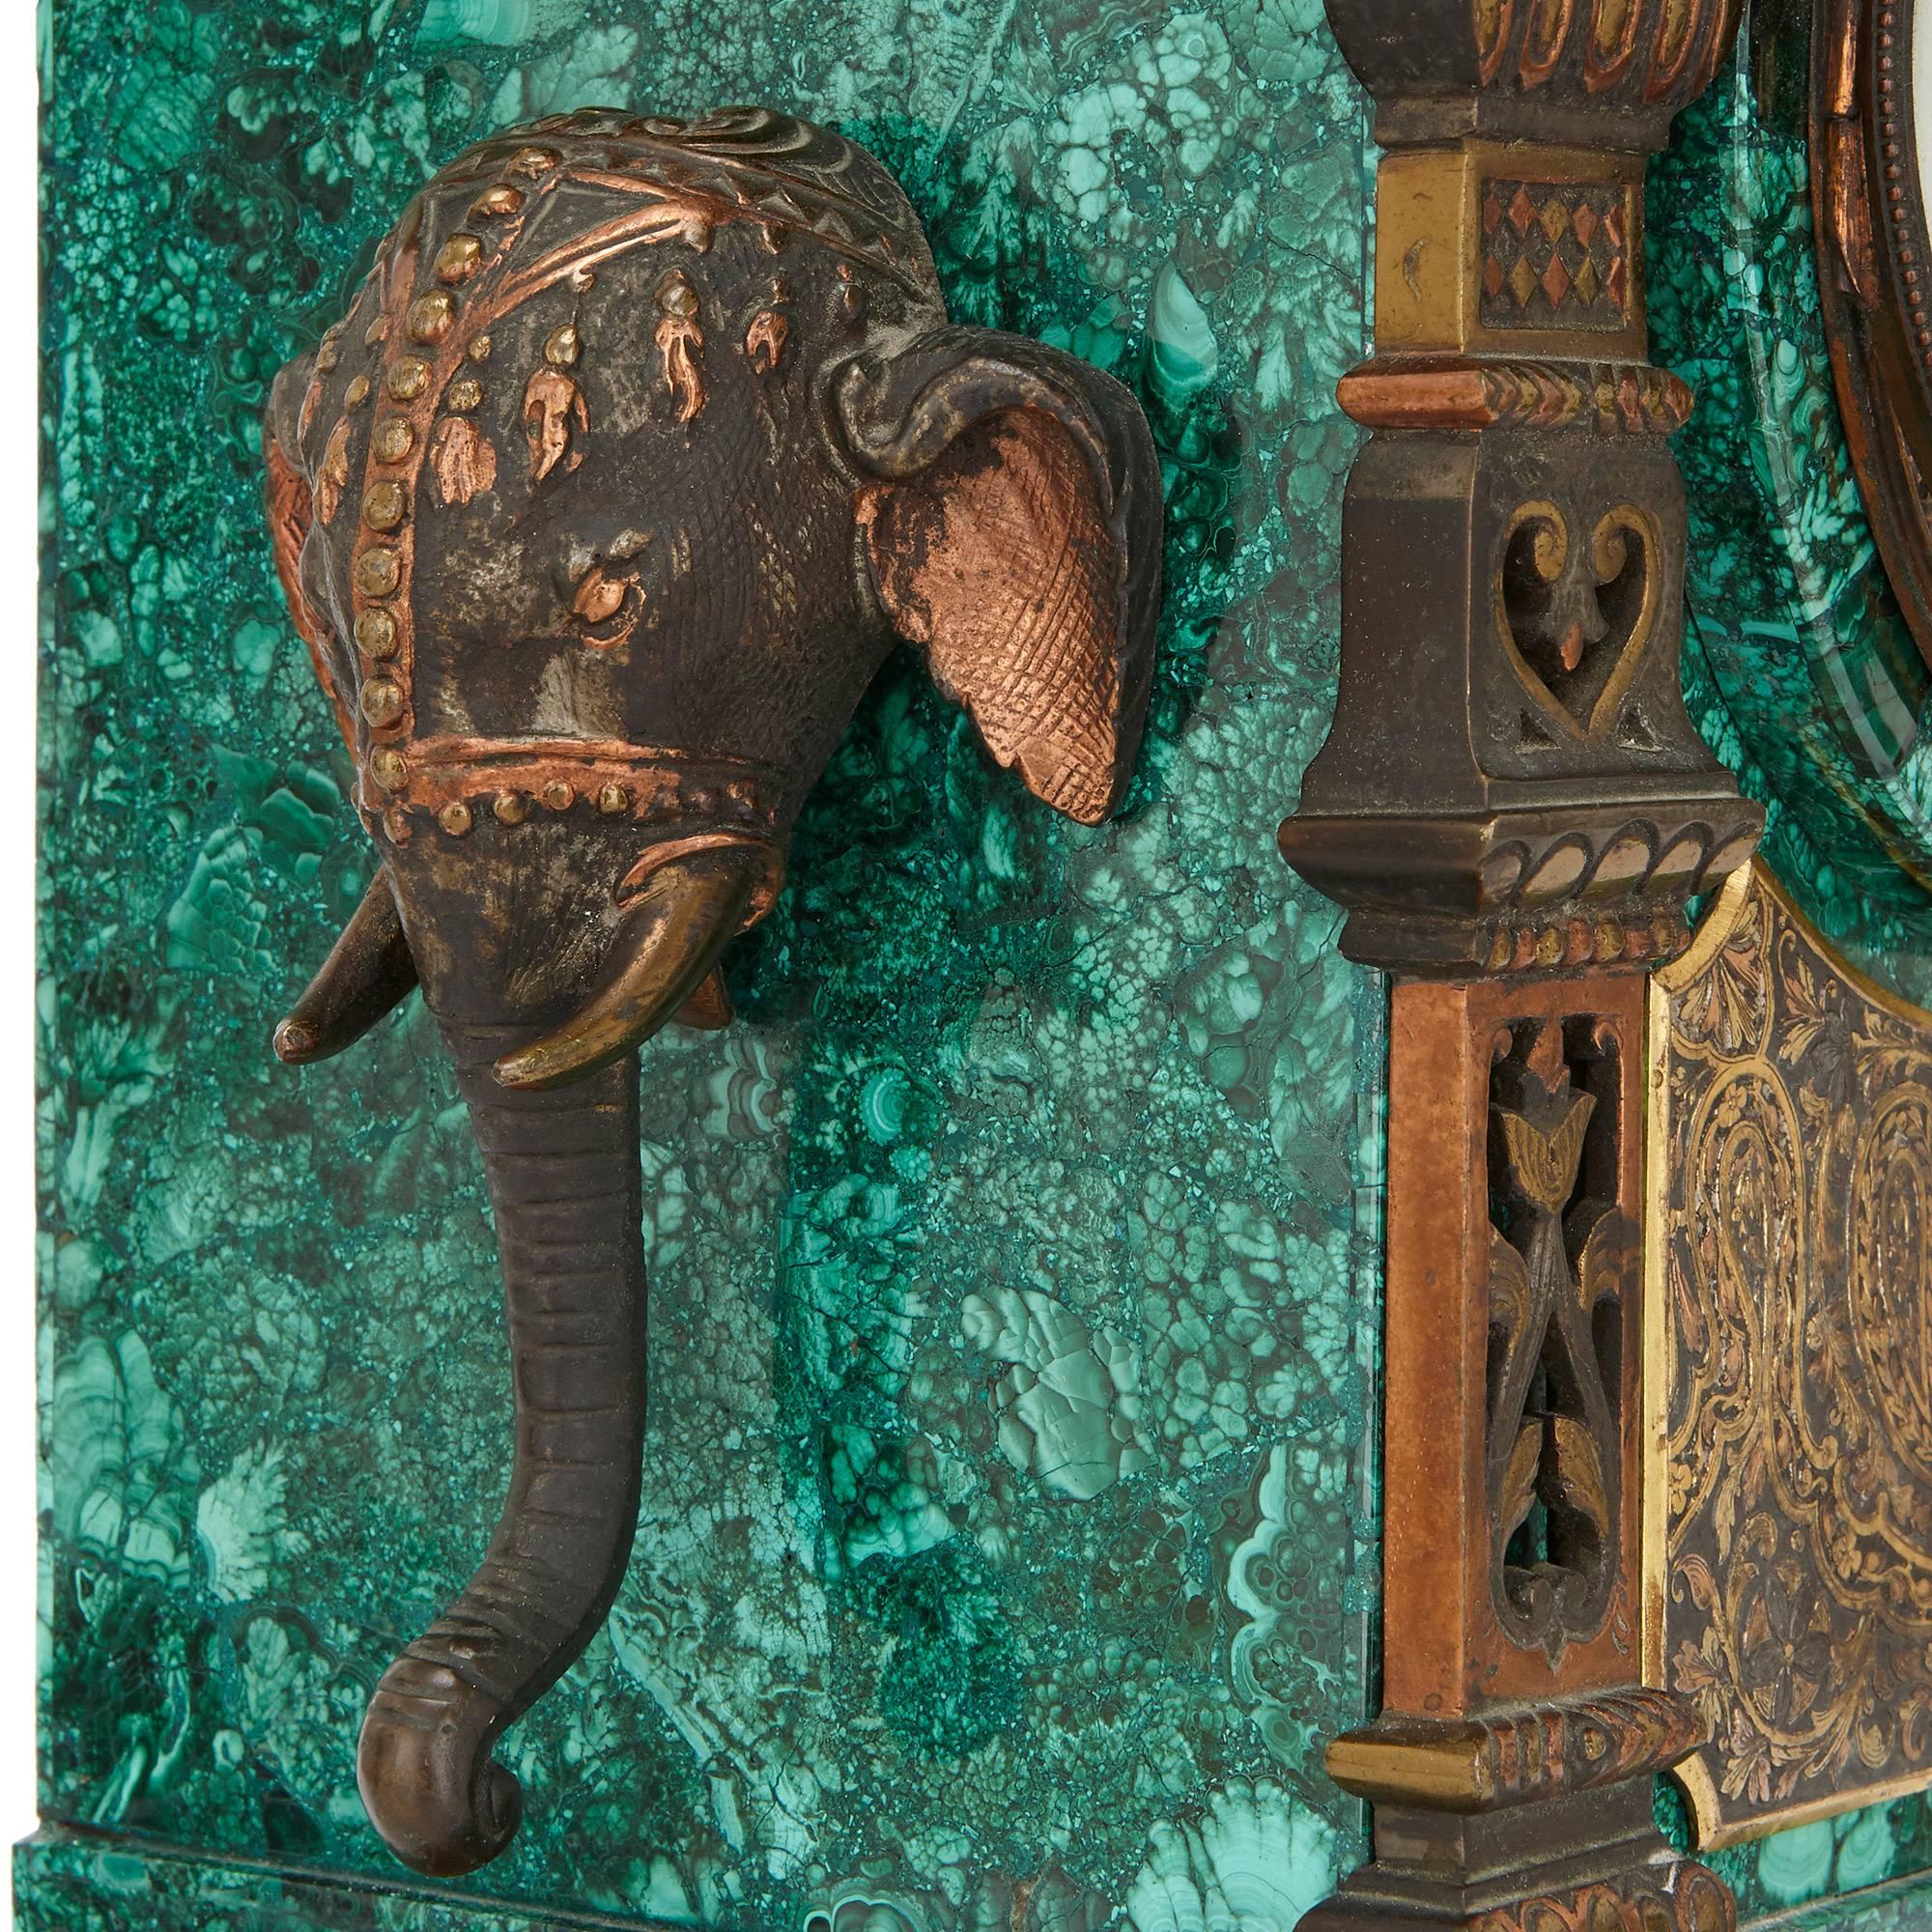 19th Century Gilt Bronze and Malachite Three-Piece Clock Set in the Moorish Revival Style